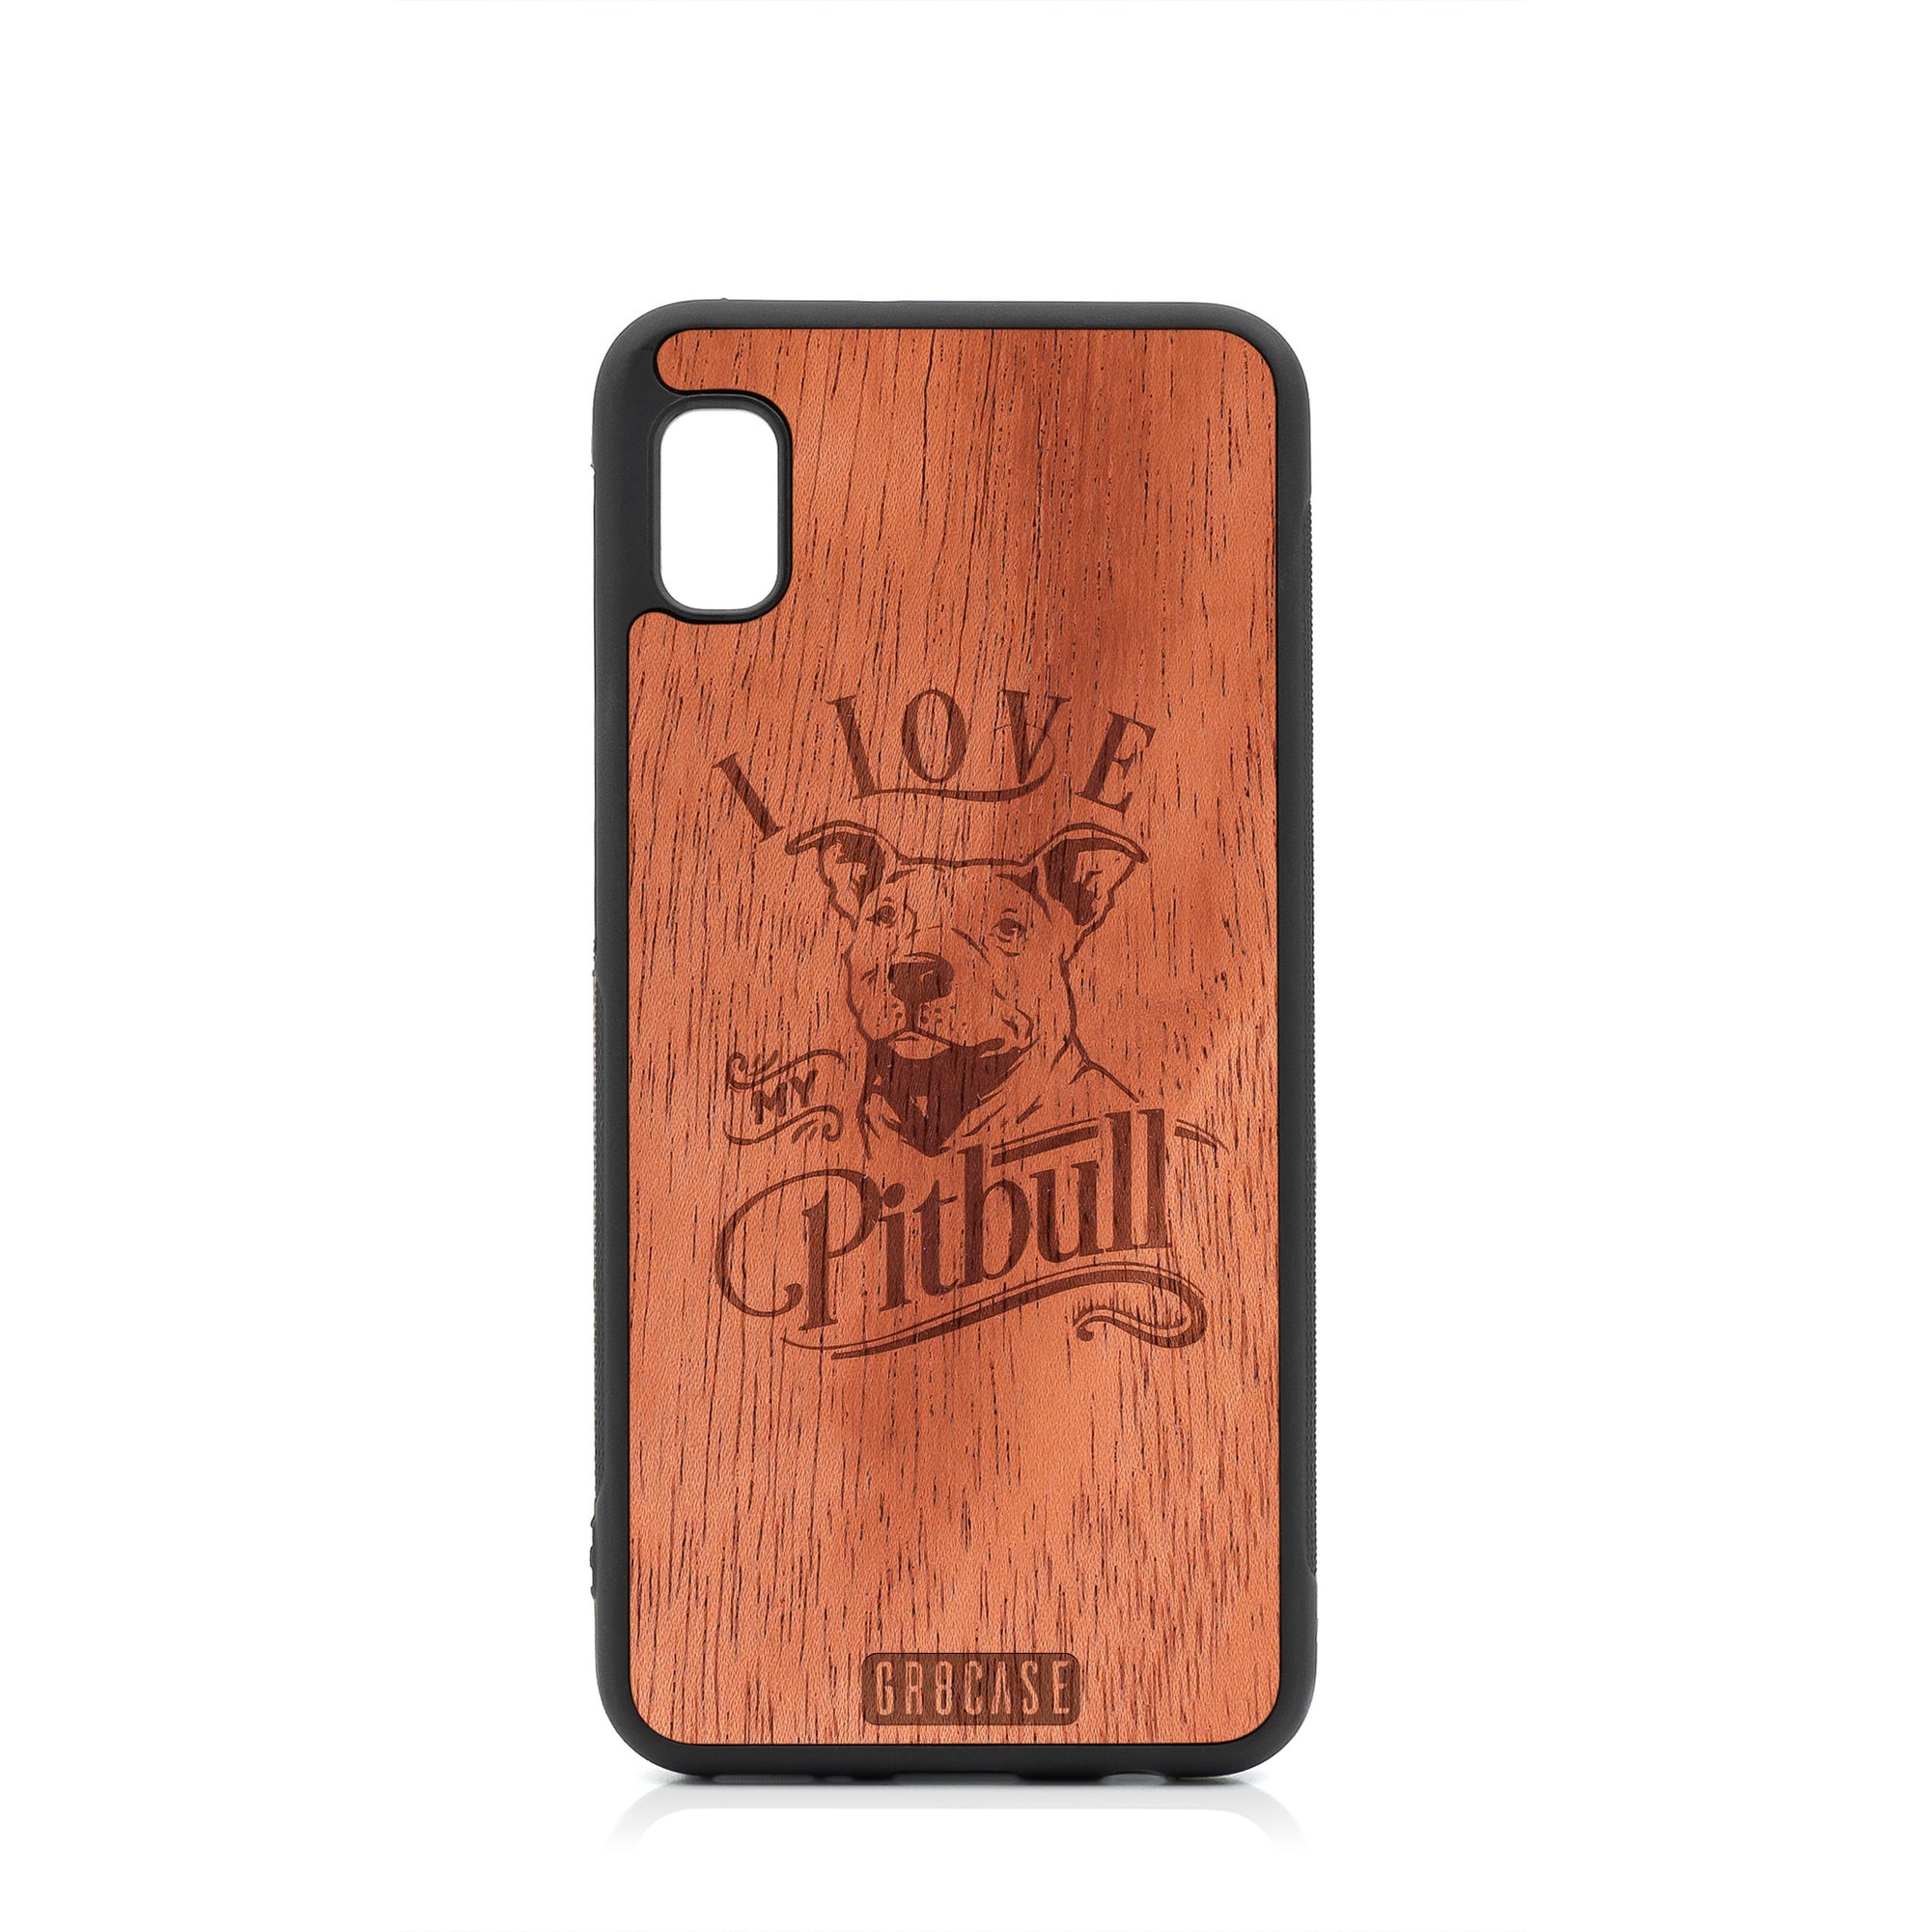 I Love My Pitbull Design Wood Case For Samsung Galaxy A10E by GR8CASE